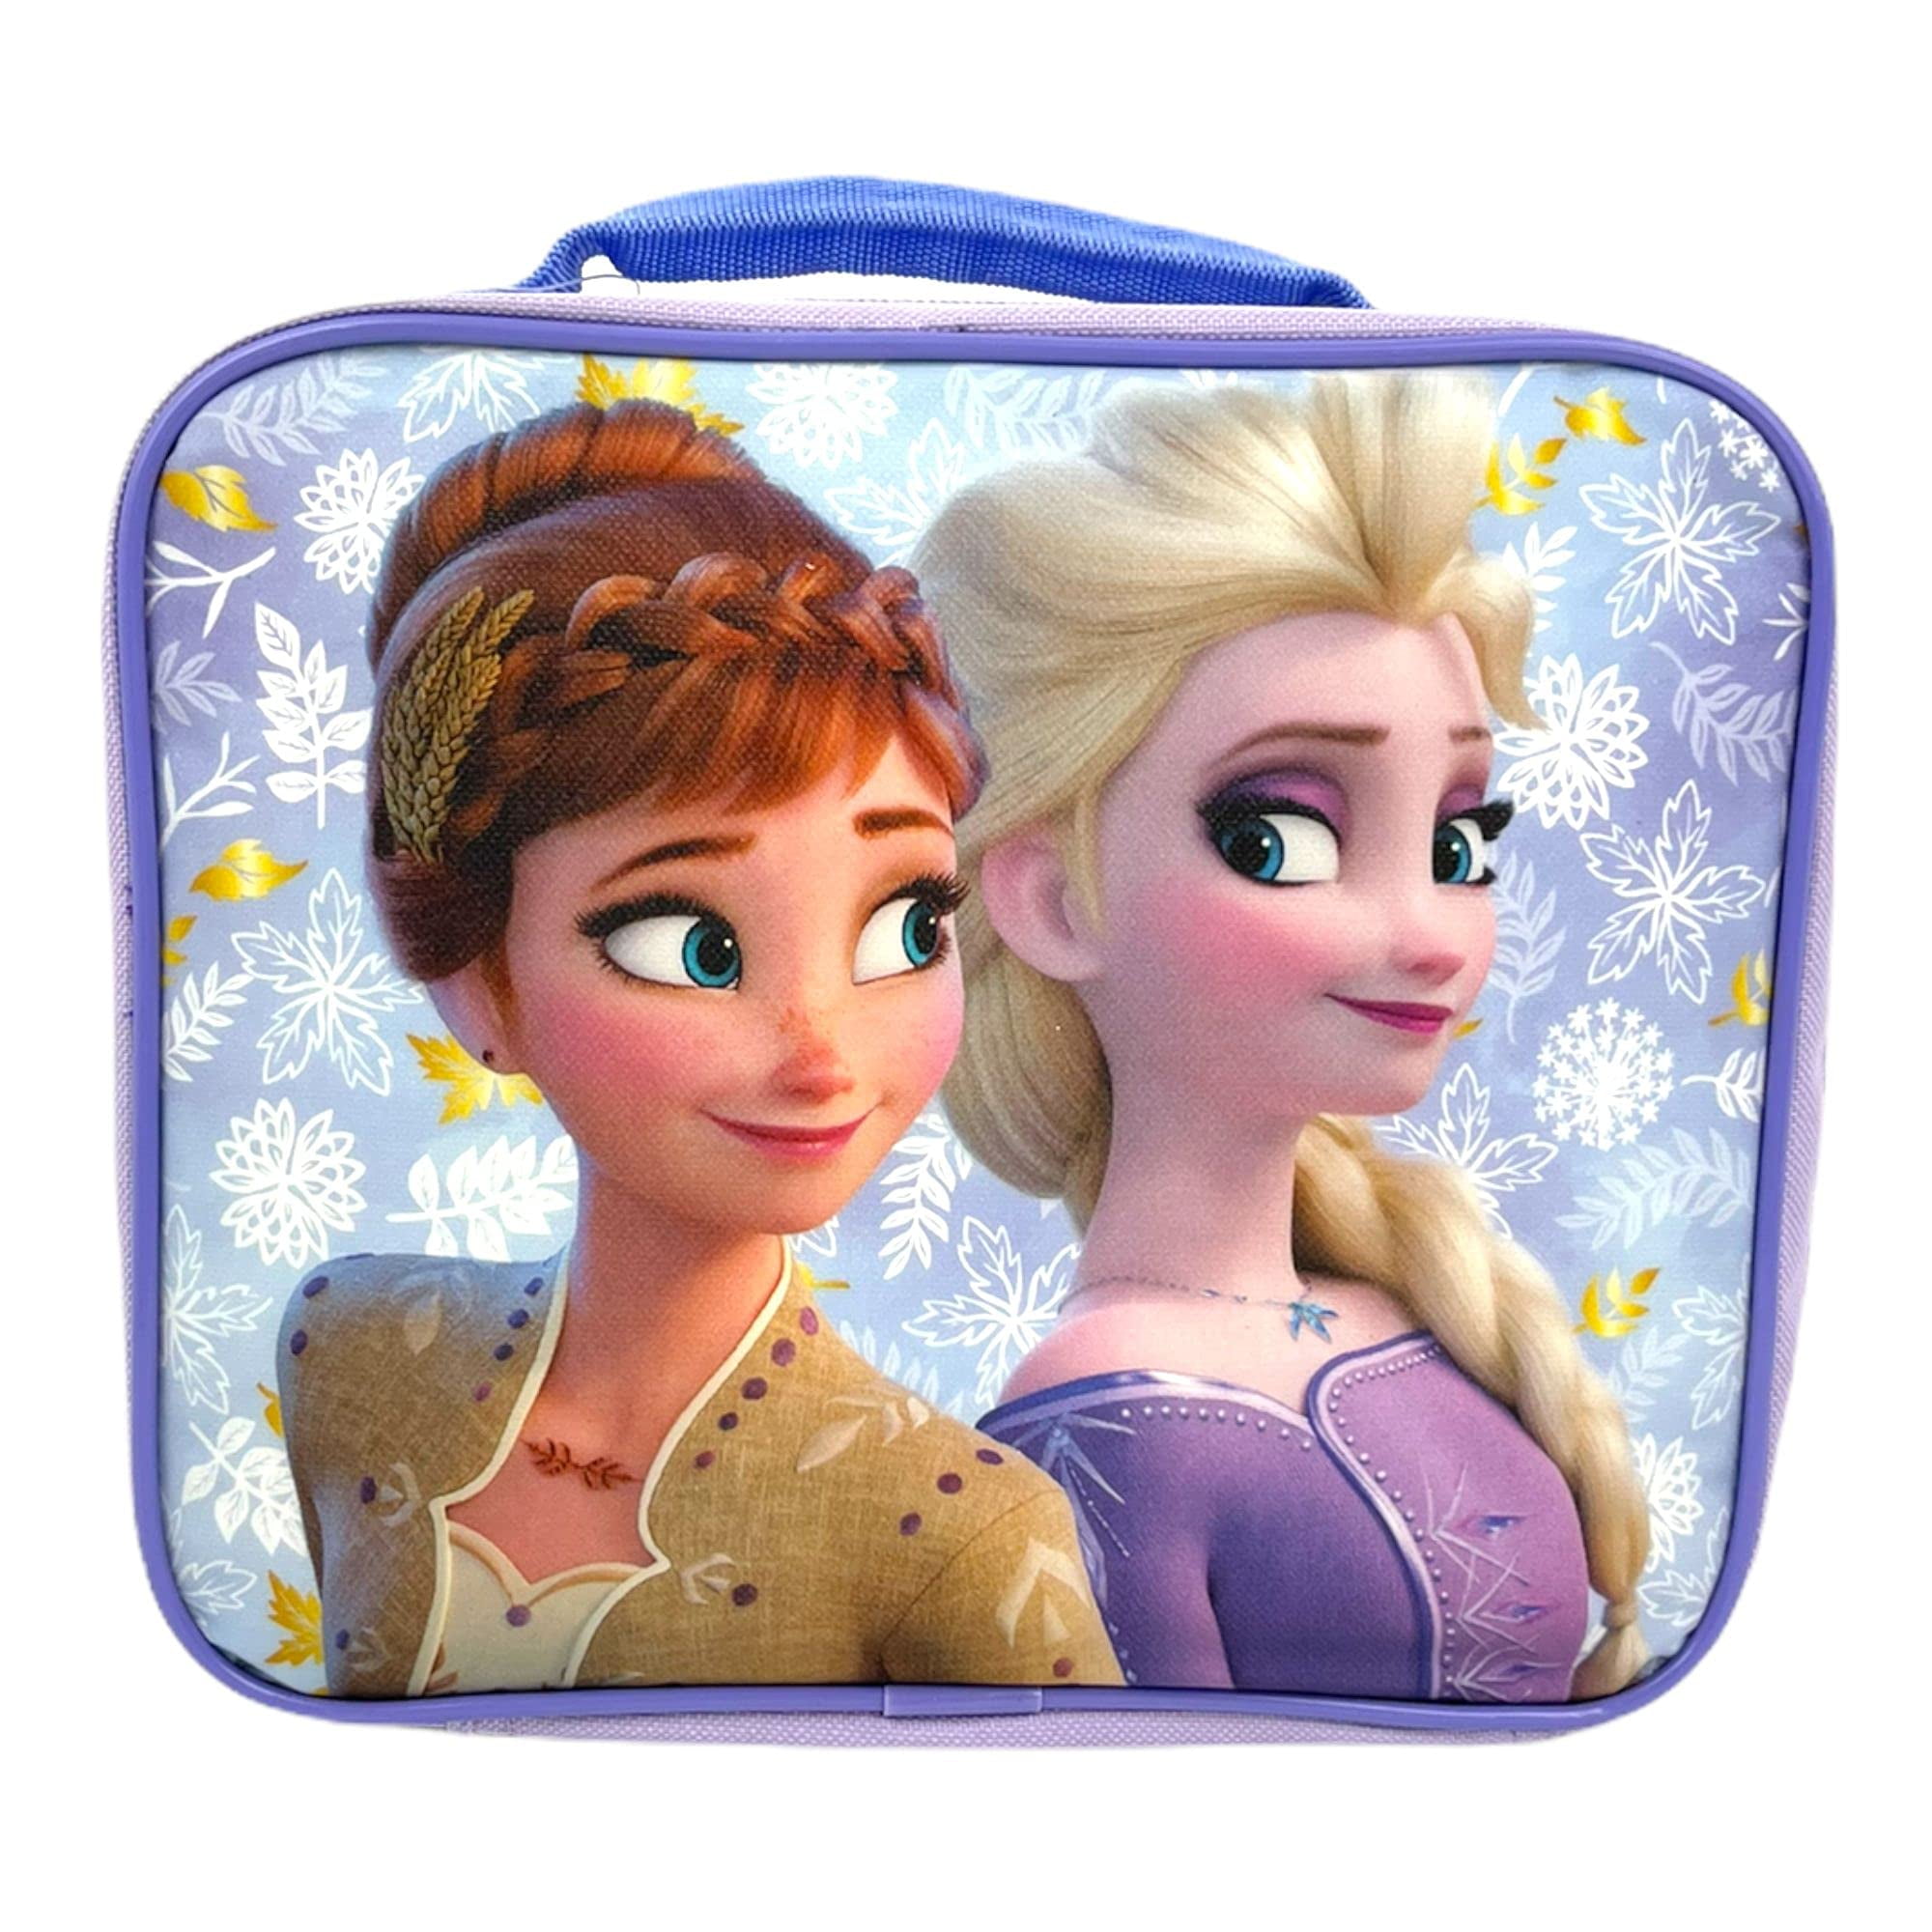 Frozen Girls Lunch Box Disney Princess Anna Elsa Insulated Lunch Bag Purple 5bd6cd06 e3ae 482f 85e6 e4a12b70a4db.7e7deef4f94e03476258b7f2ea1d597f